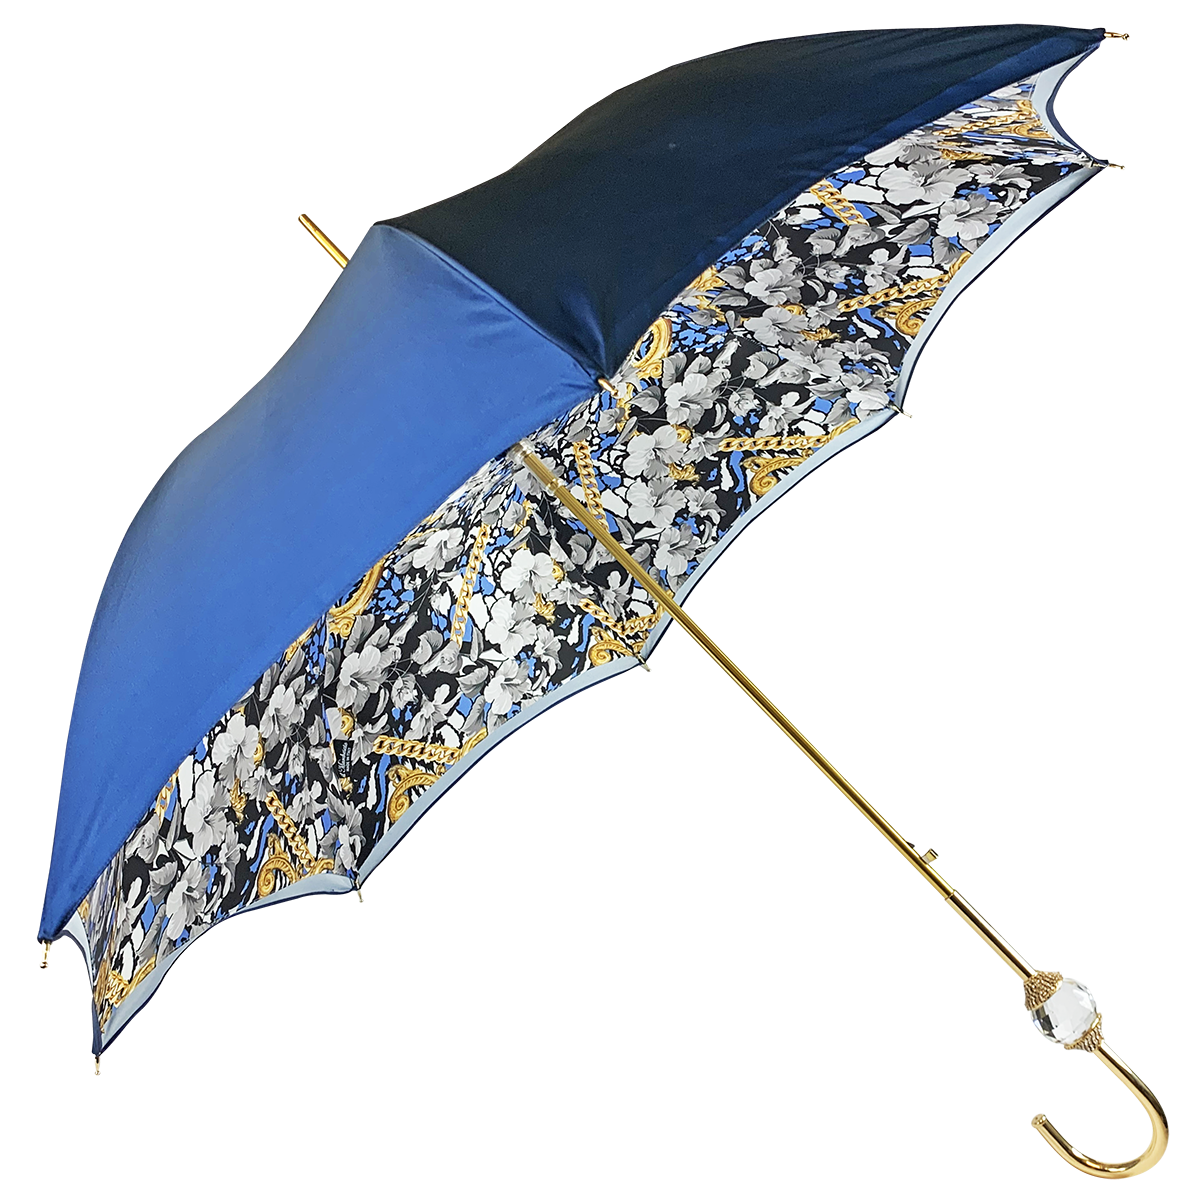 Beautiful Umbrella with Swarovski crystal sphere